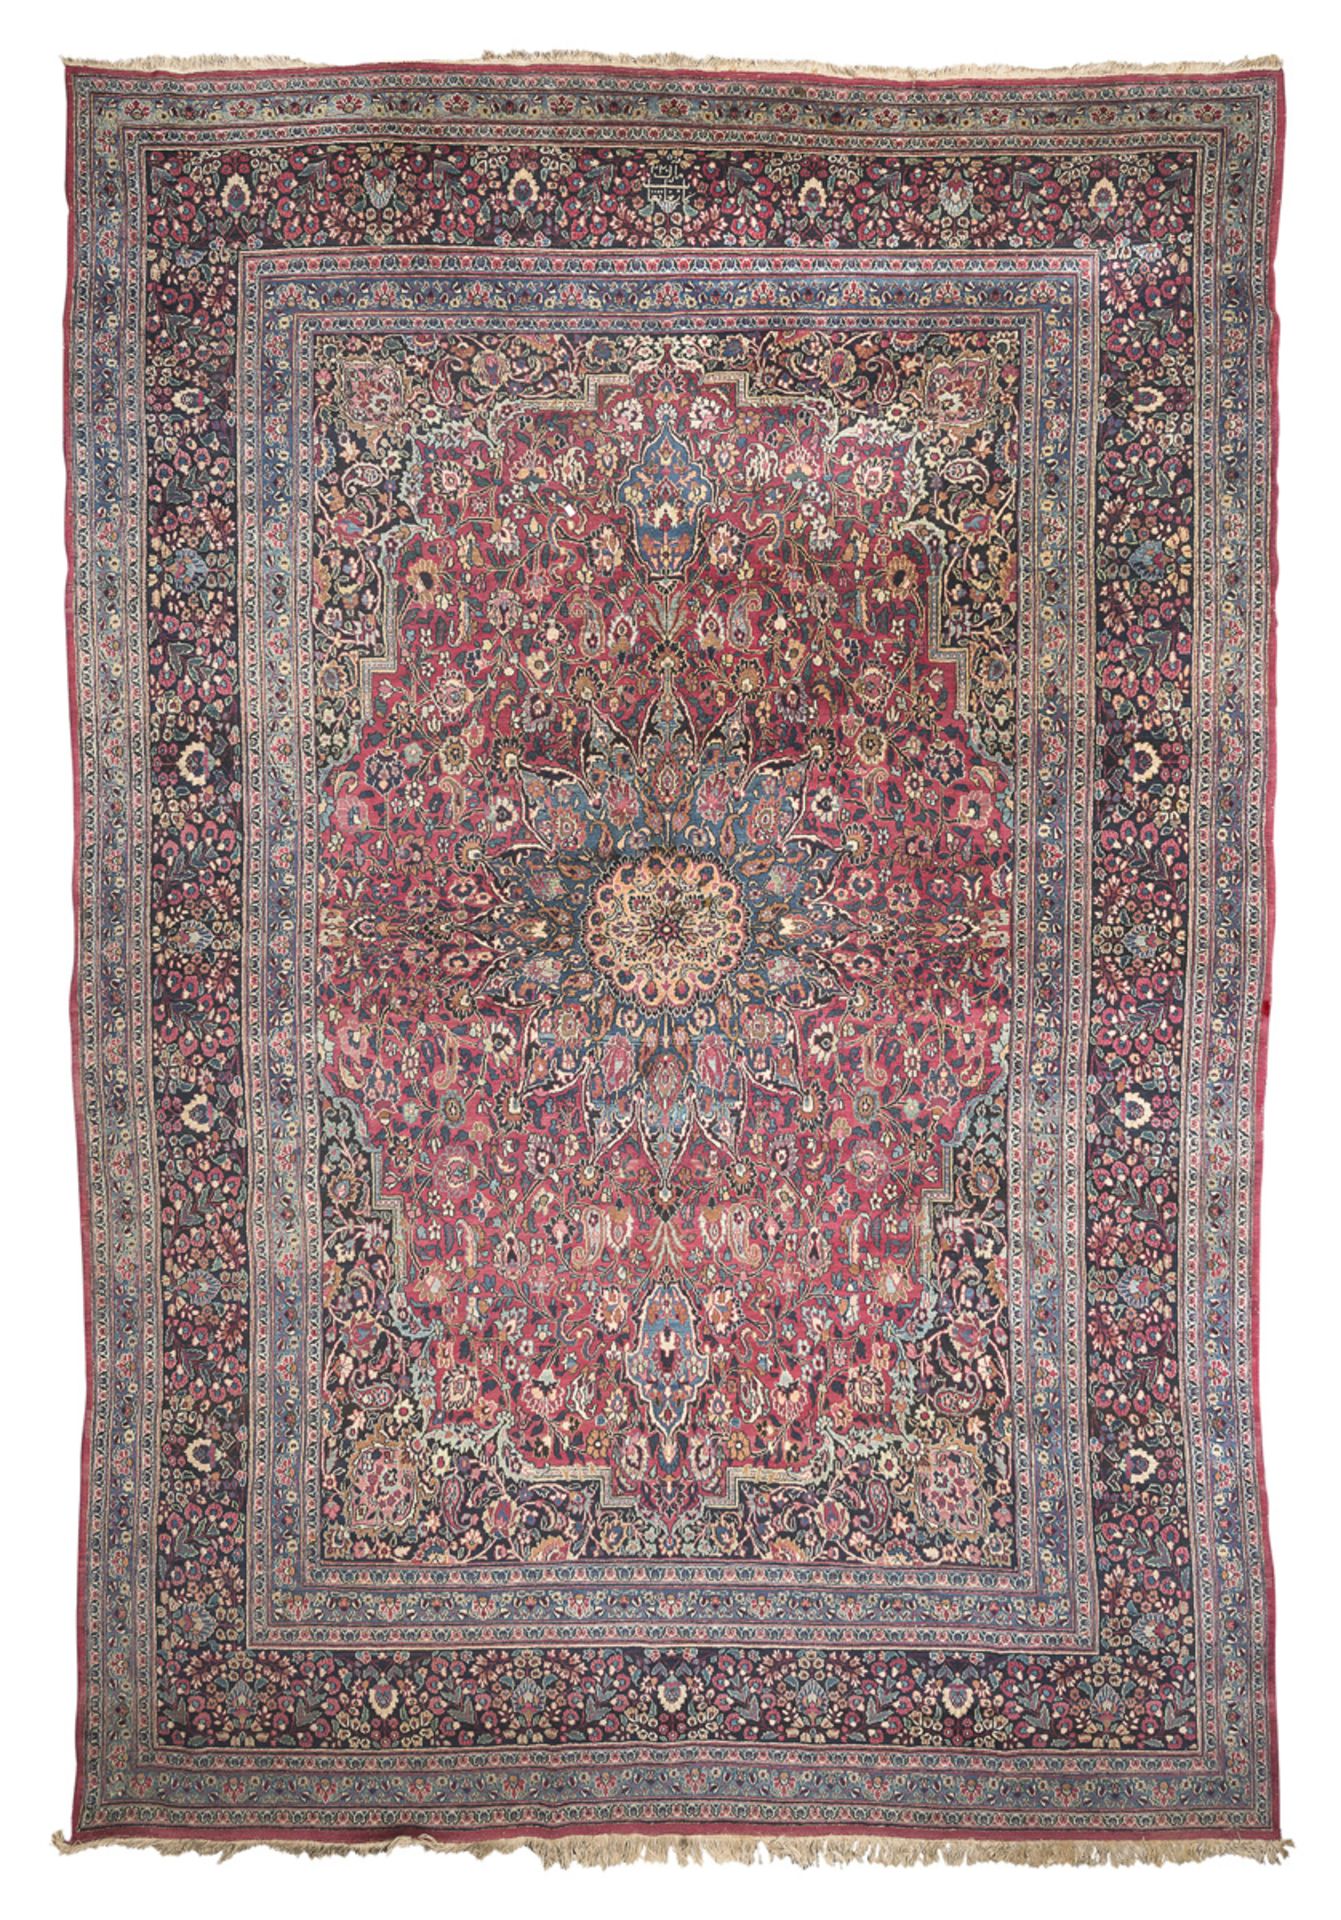 Splendid TABRIZ Carpet - EARLY 20TH CENTURY